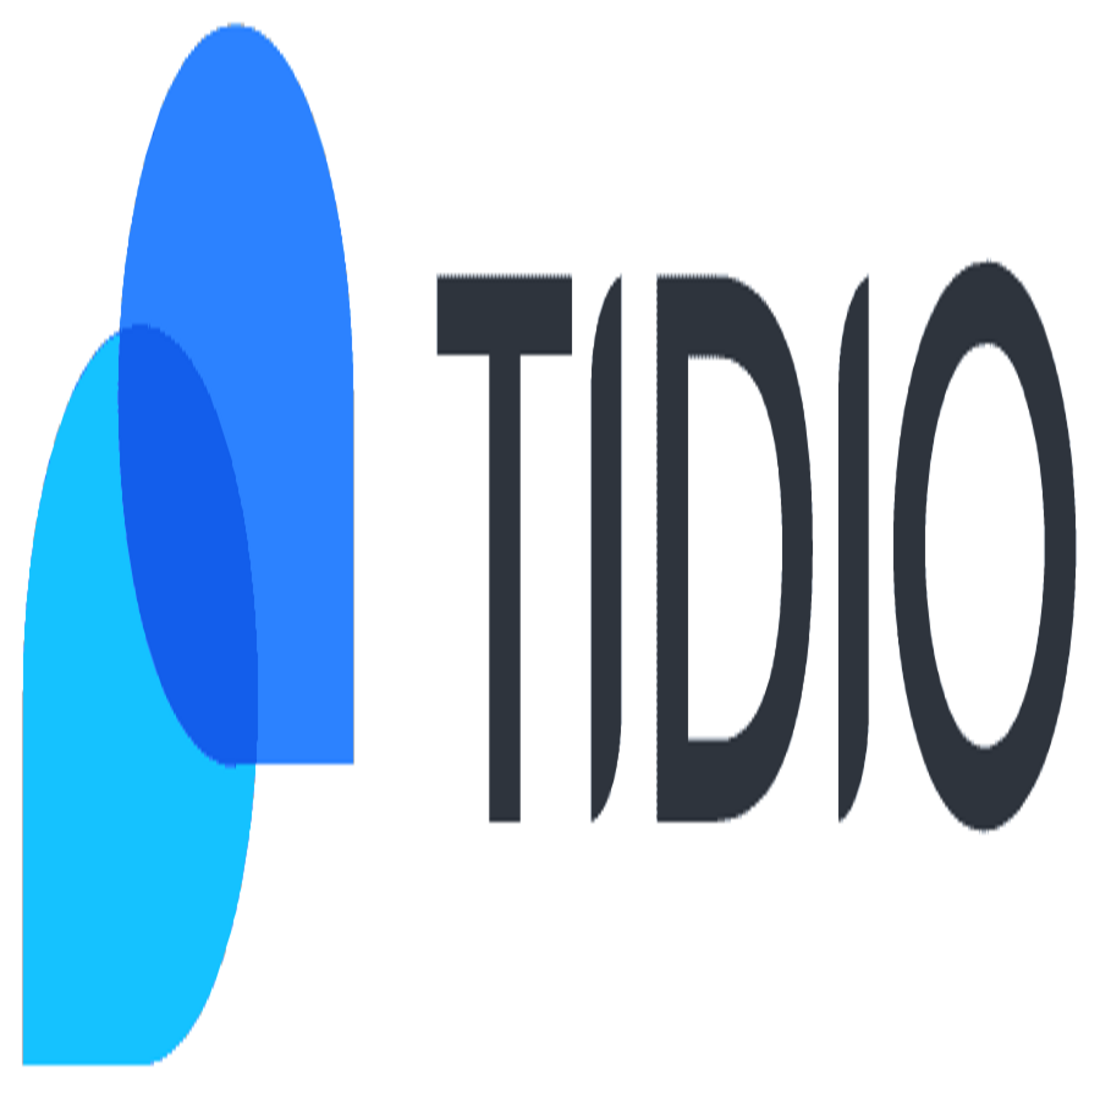 Tidio customere service platform logo